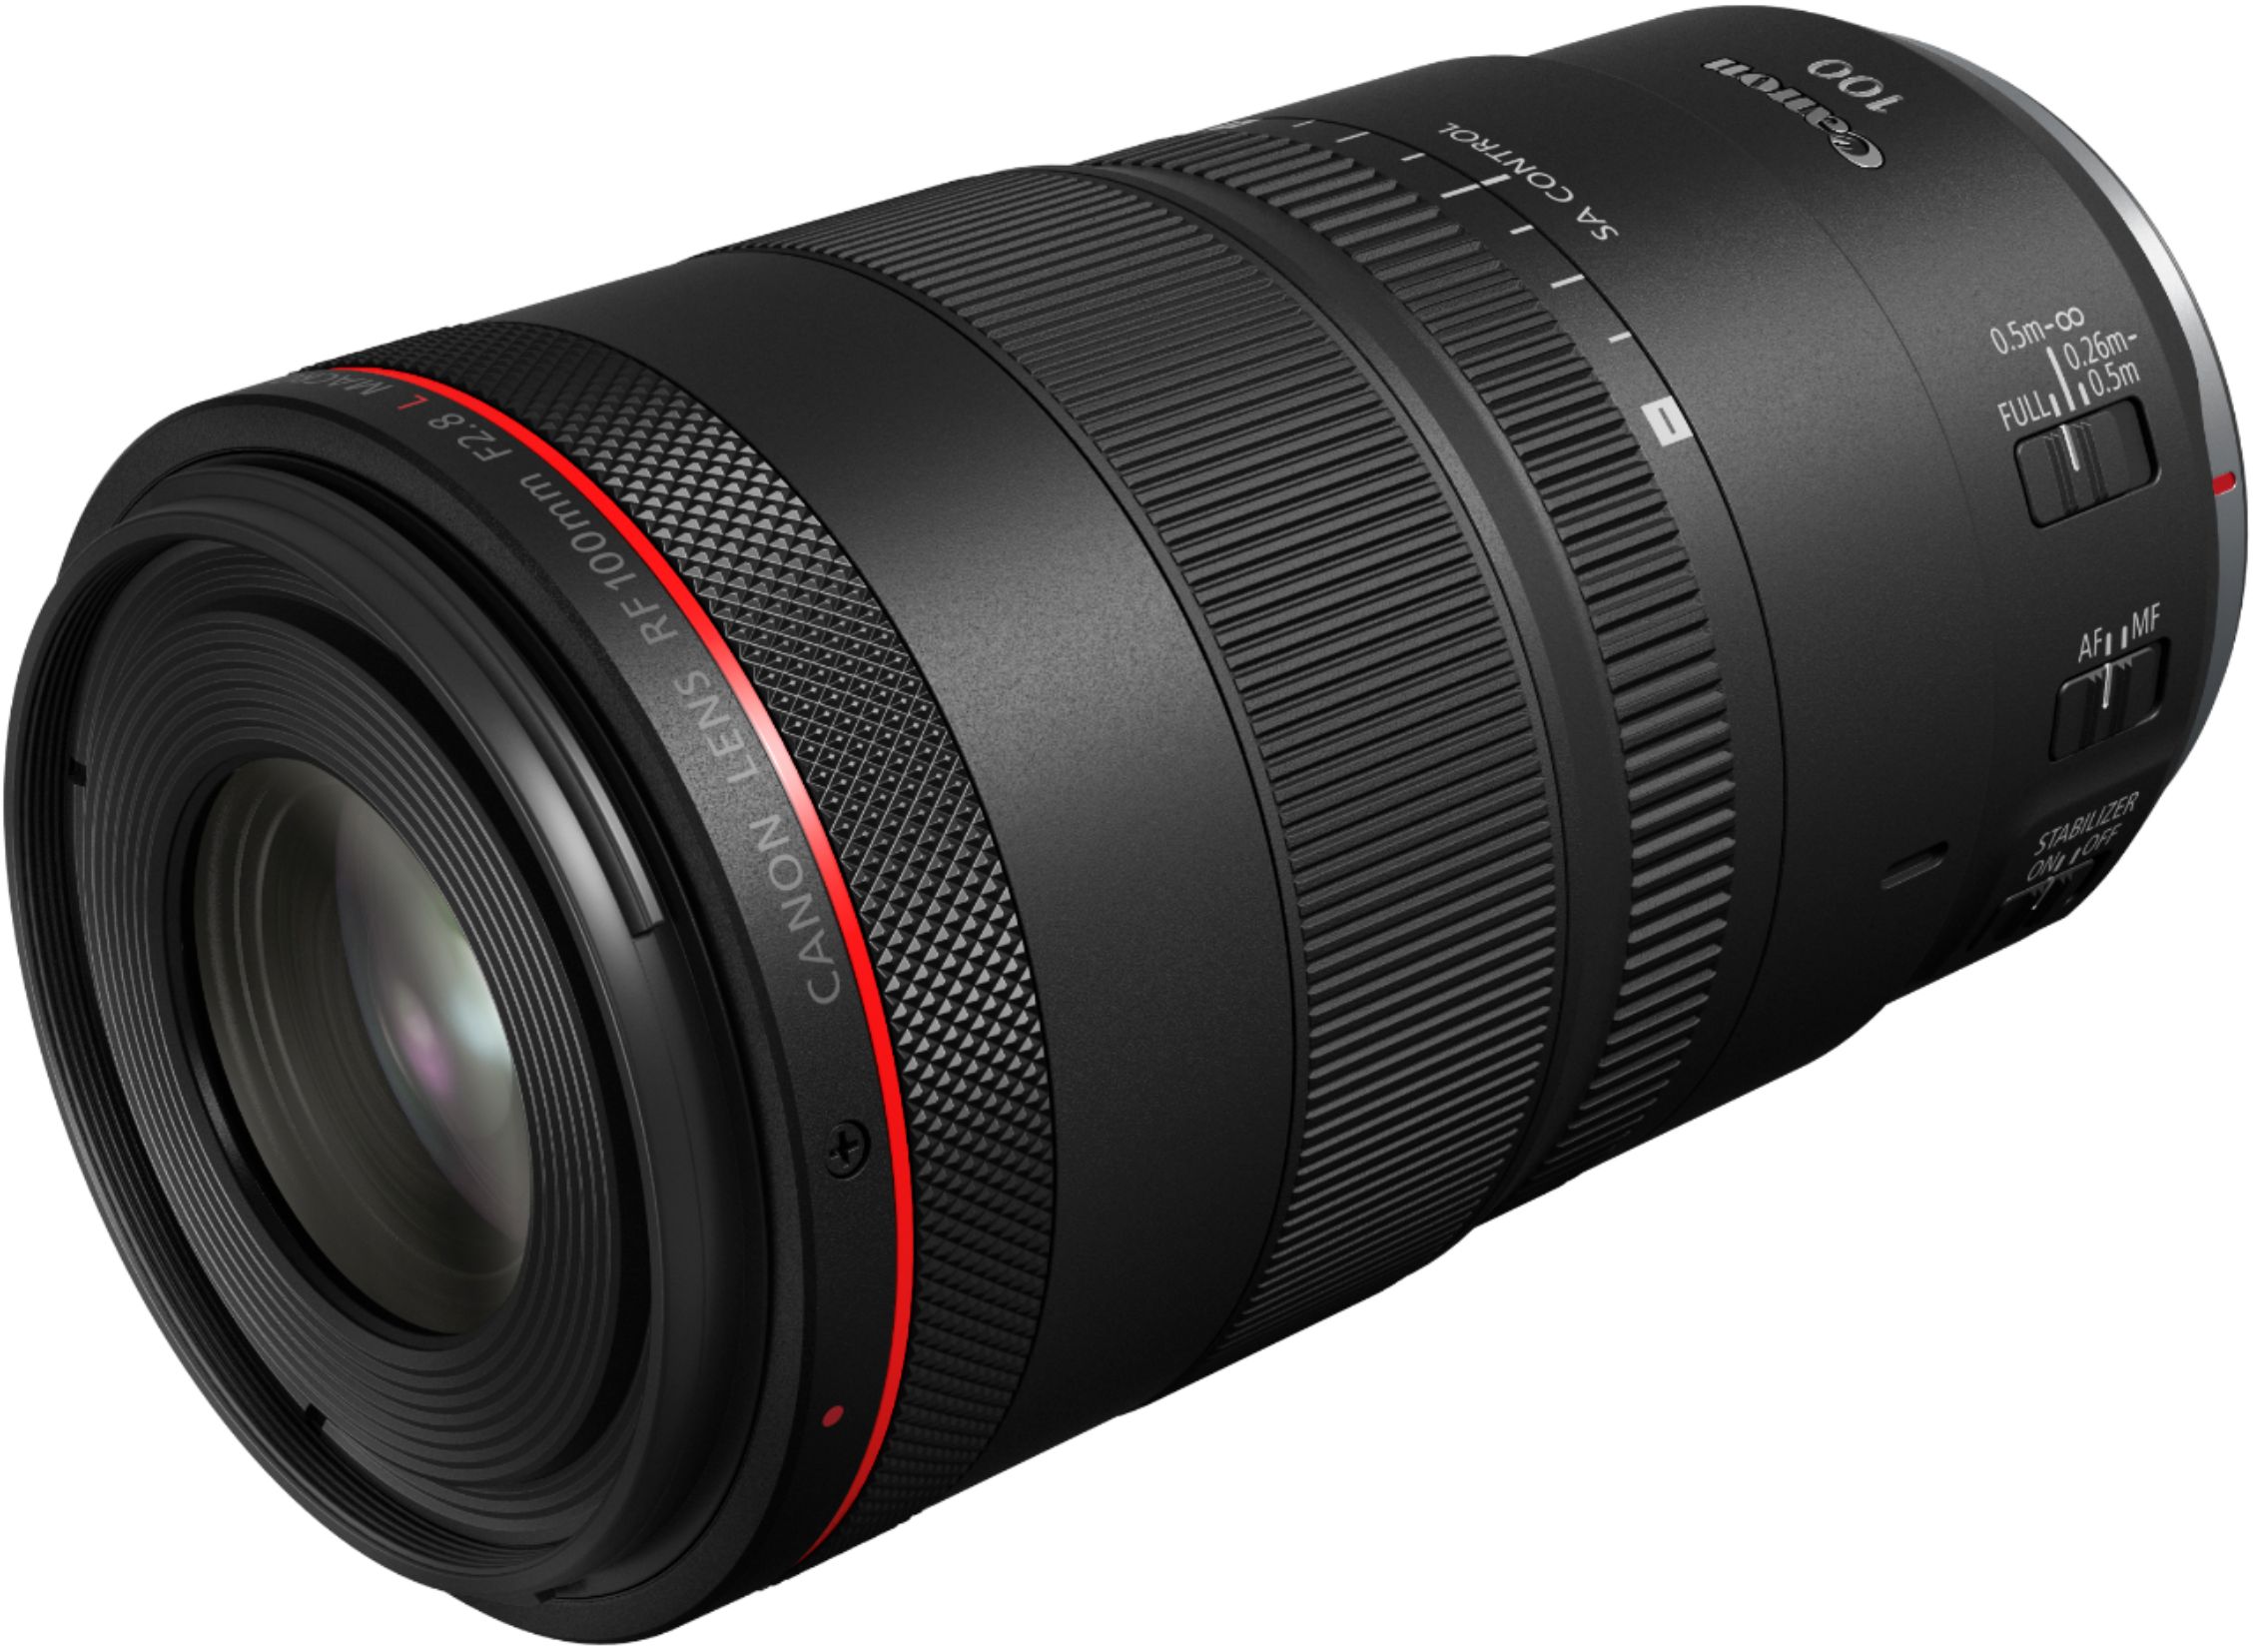 Left View: Sigma - Art 135mm f/1.8 DG HSM Telephoto Lens for Select Nikon DSLR Cameras - Black